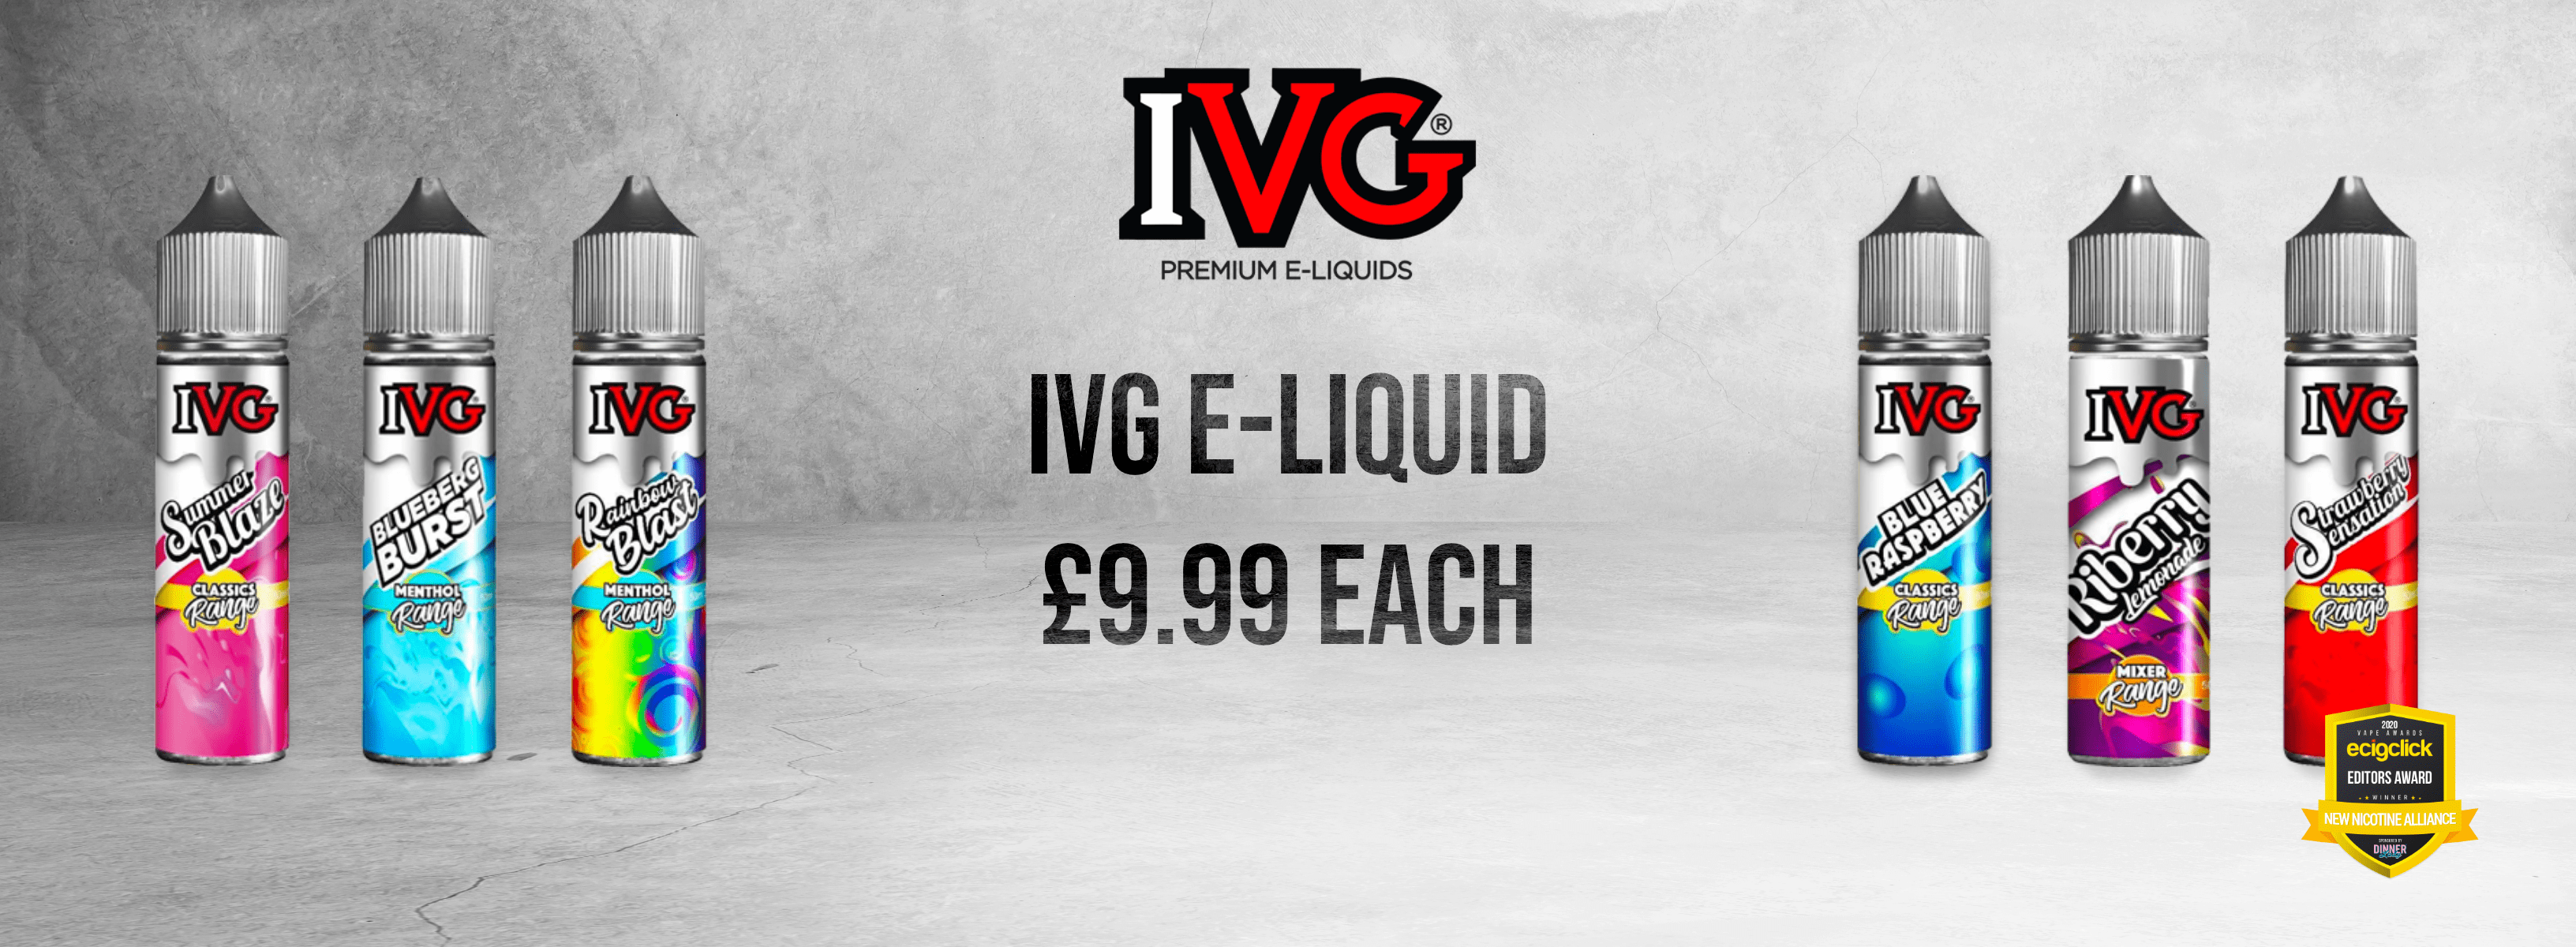 Advert for IVG E-liquids